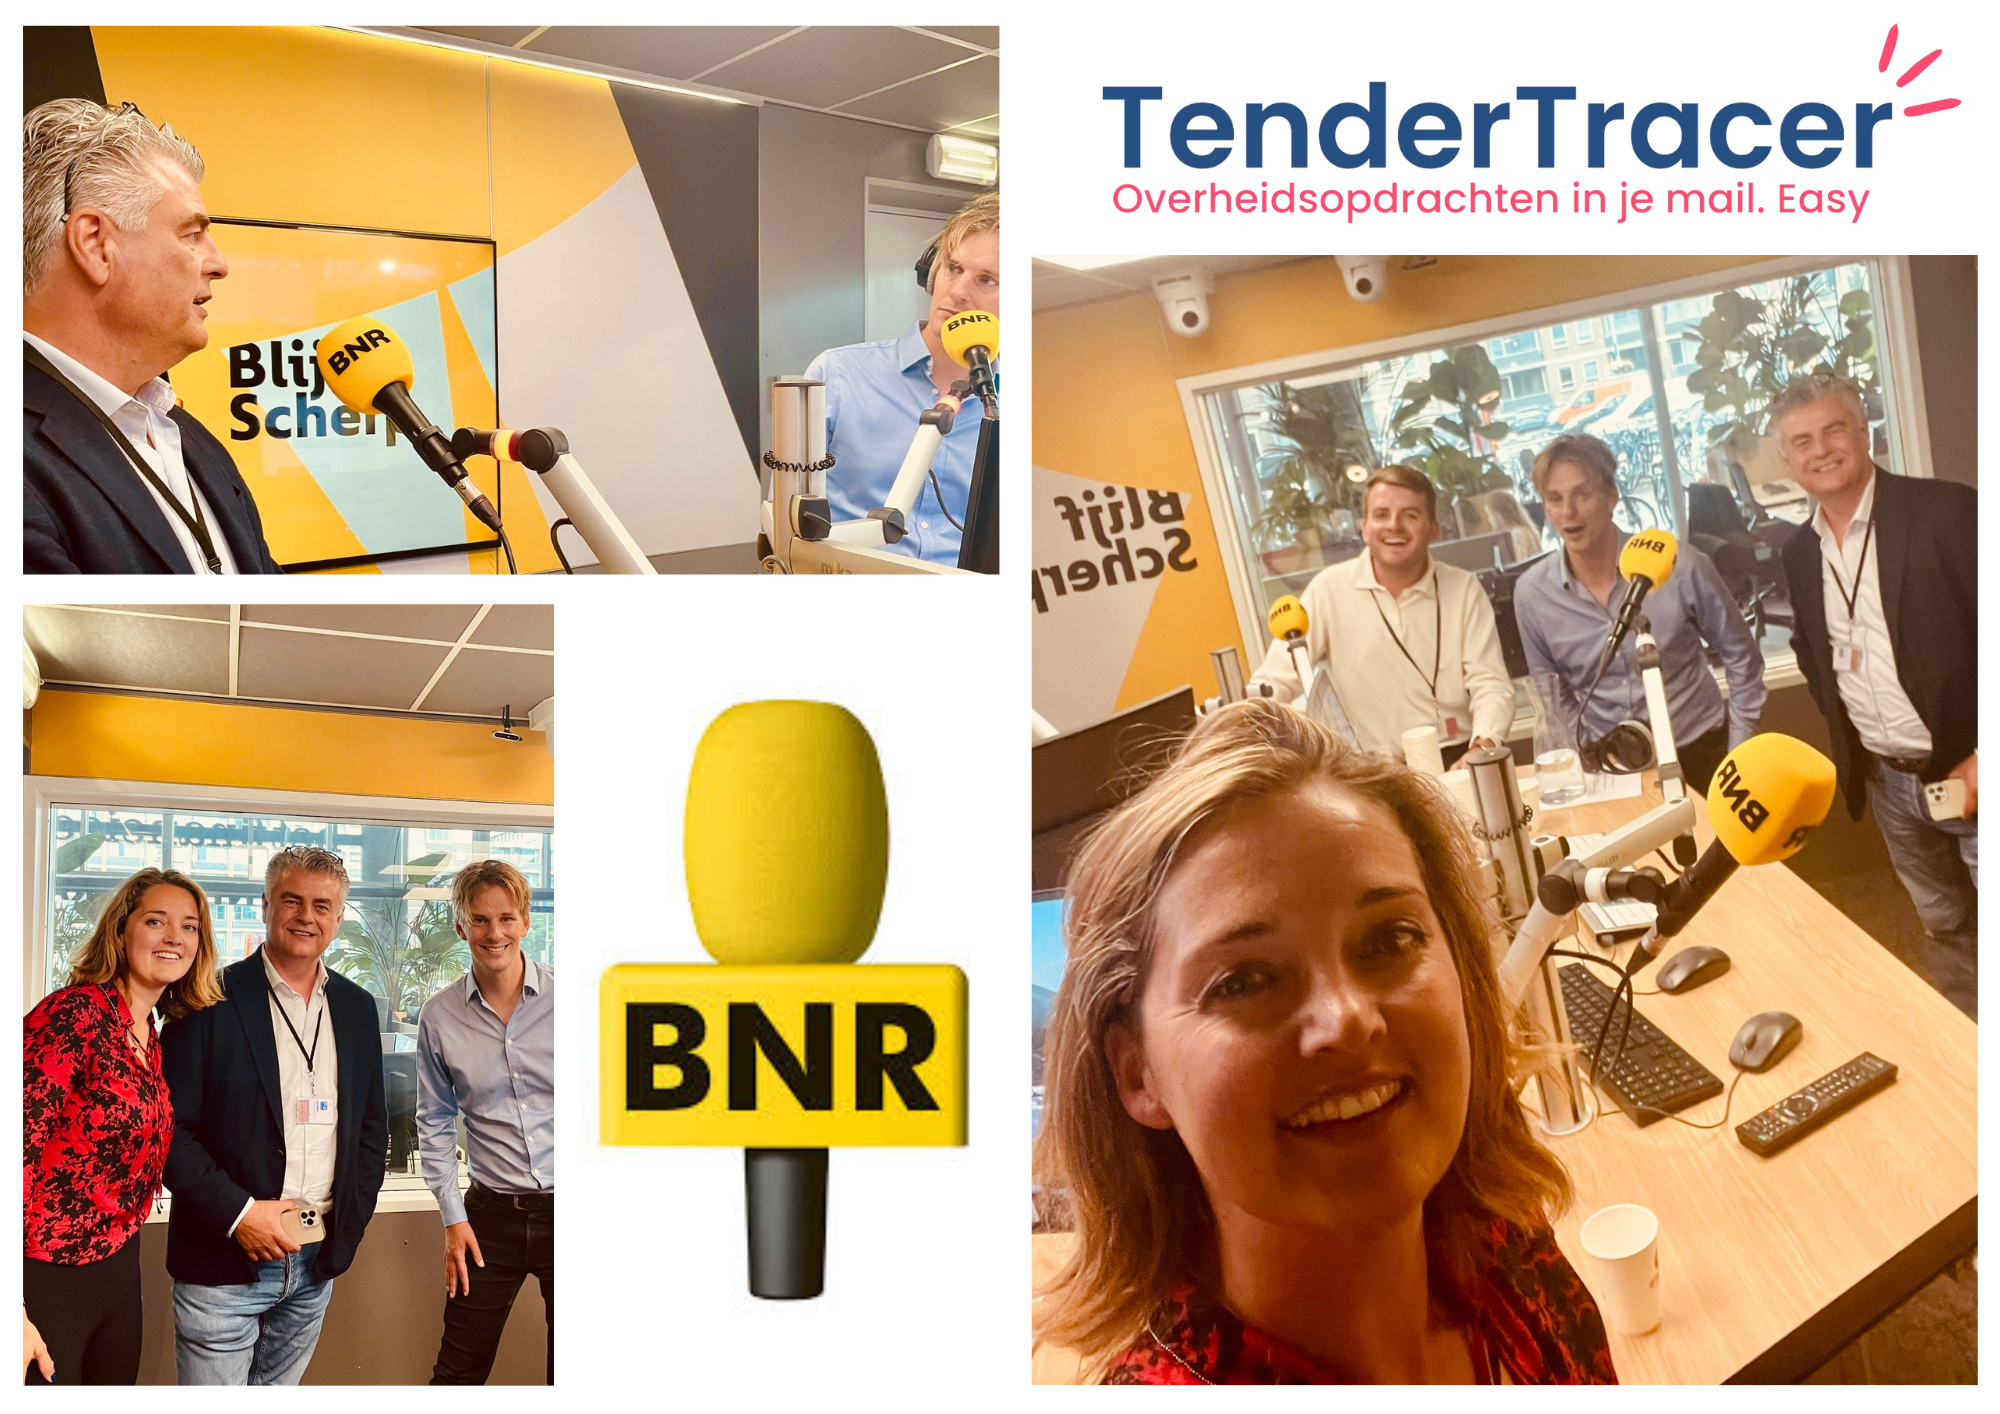 TenderTracer in BNR radioprogramma als Geniaal product betiteld